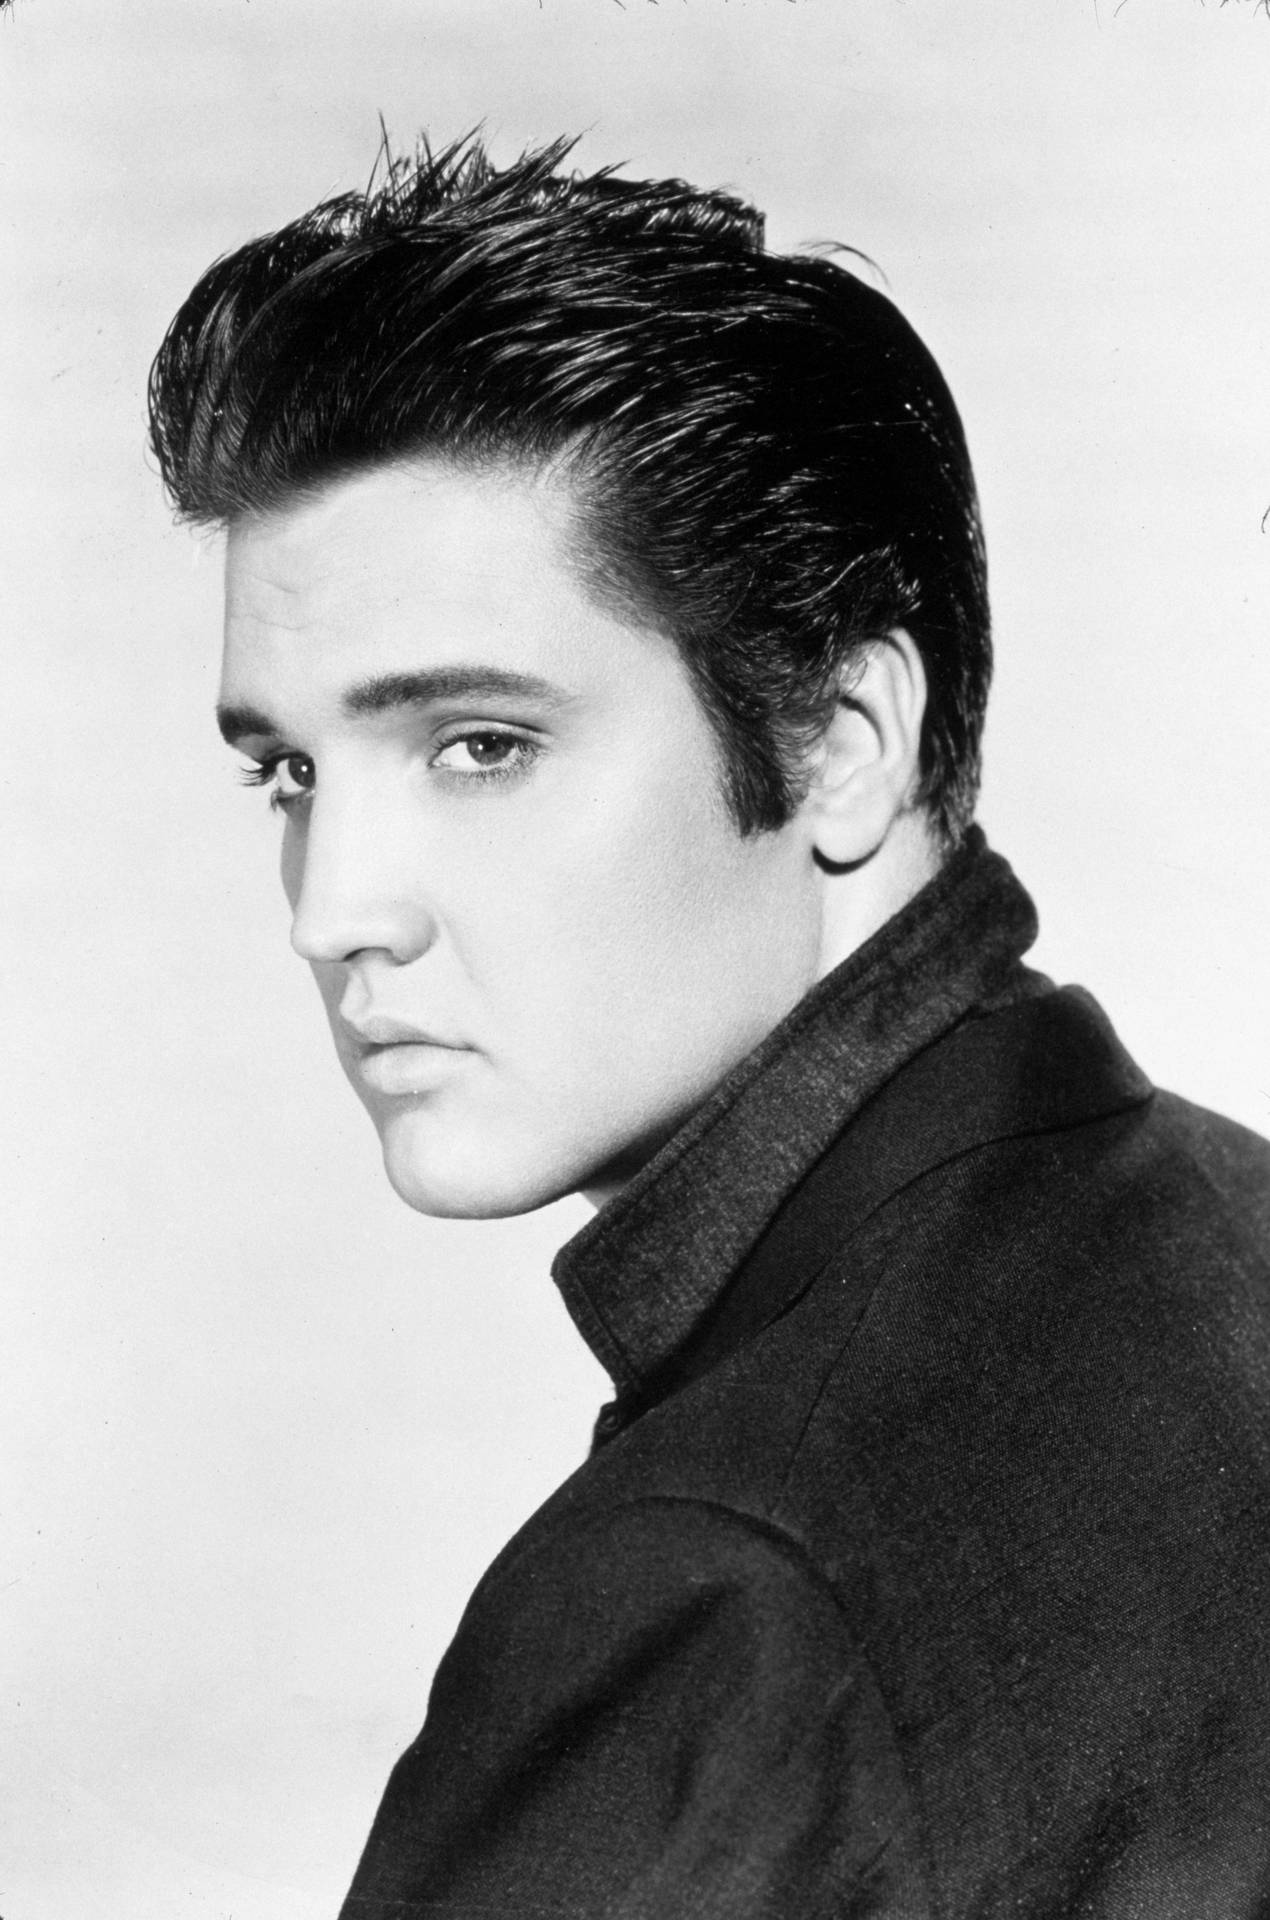 Elvis Presley Pictures